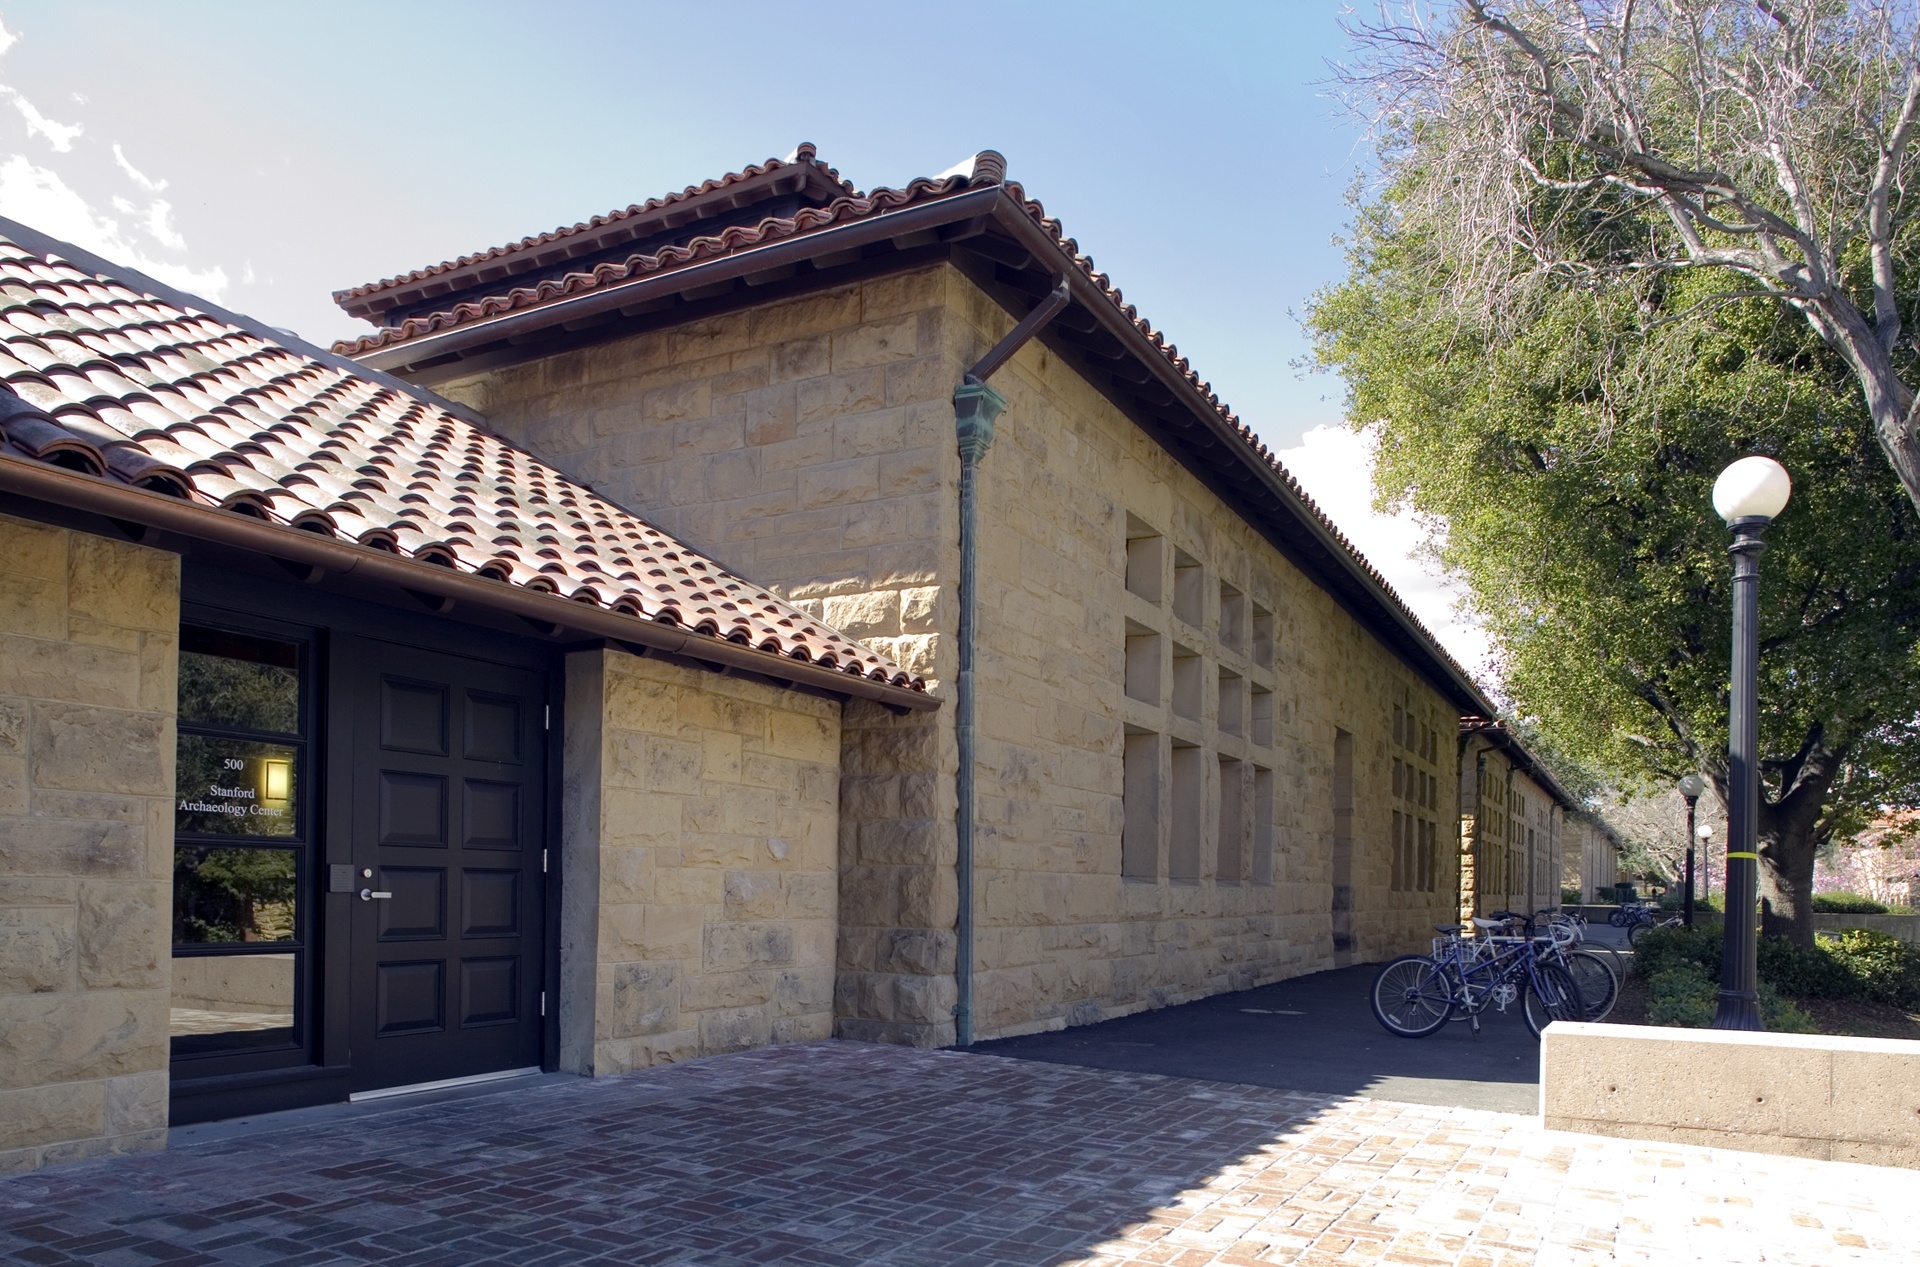 Stanford University Archeology Center - Architectural Rehabilitation - ARG